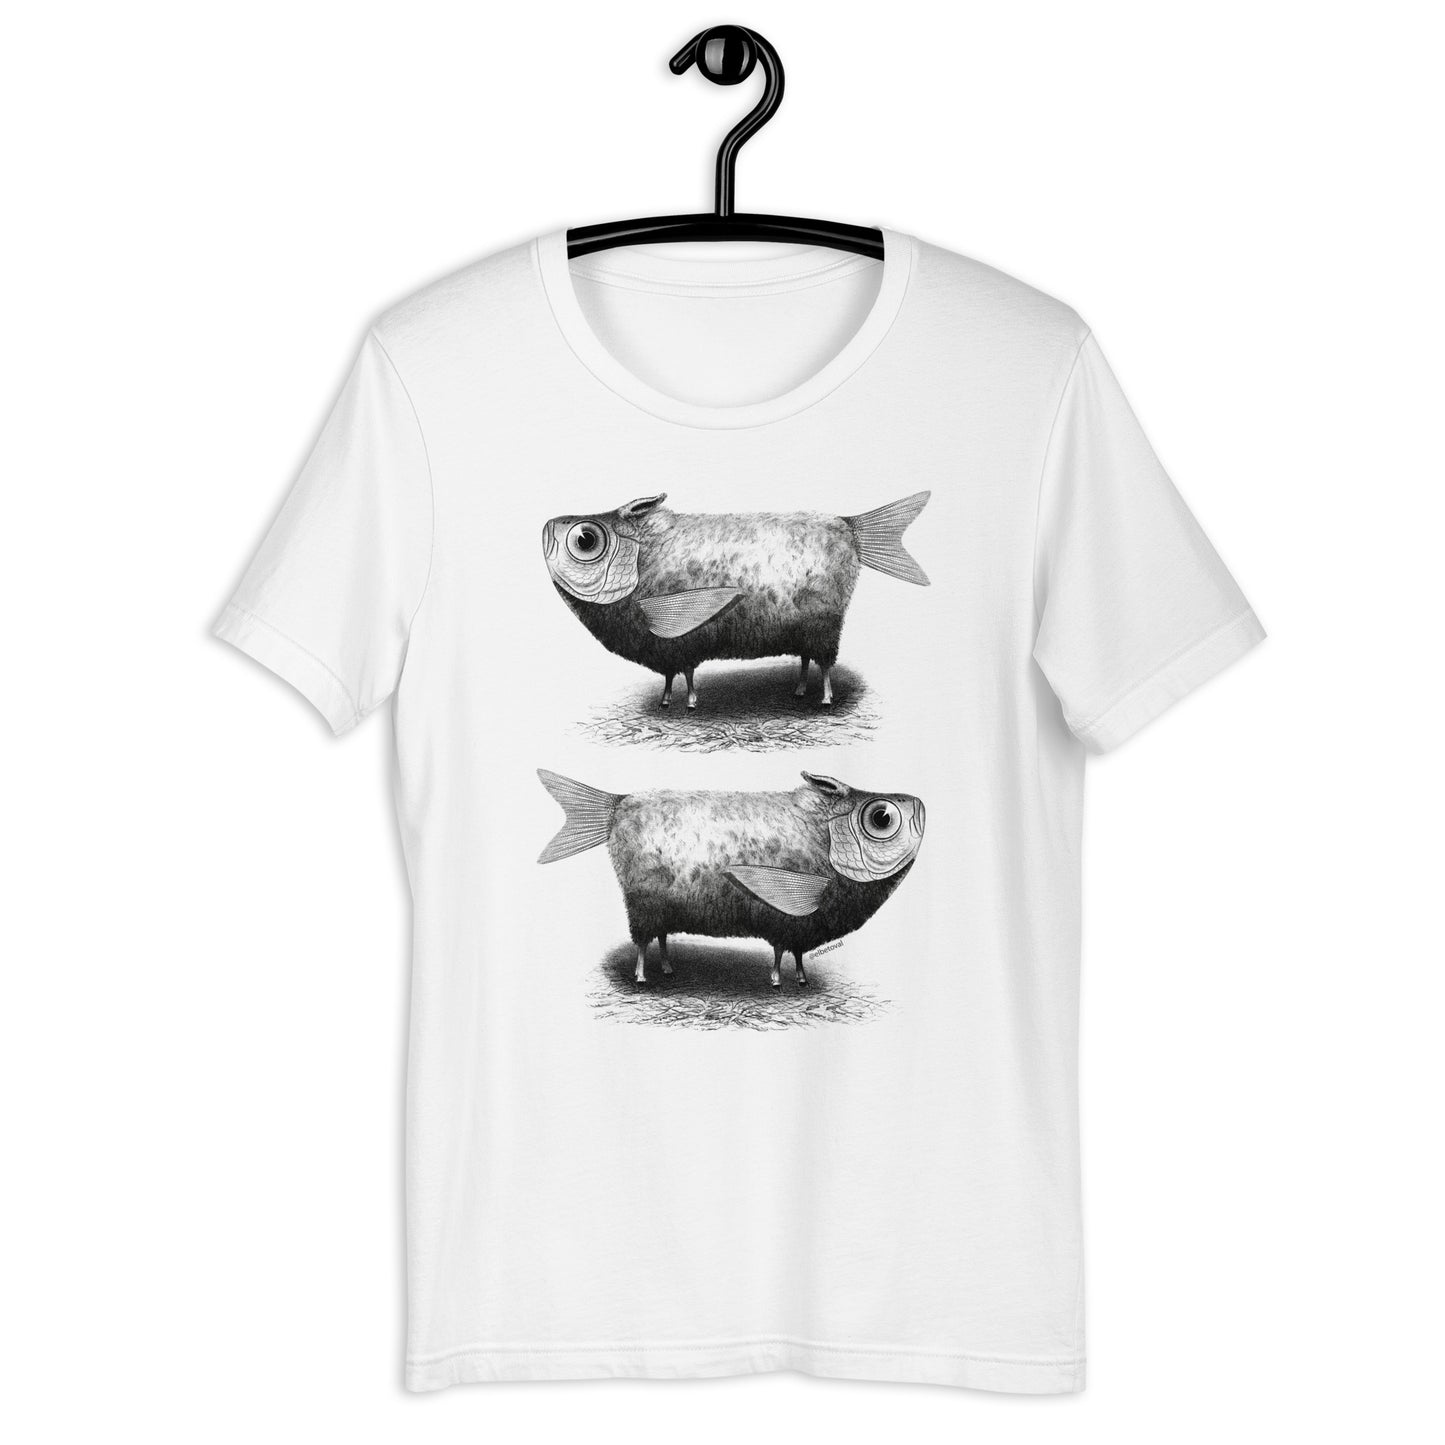 Sheep fish. Unisex t-shirt